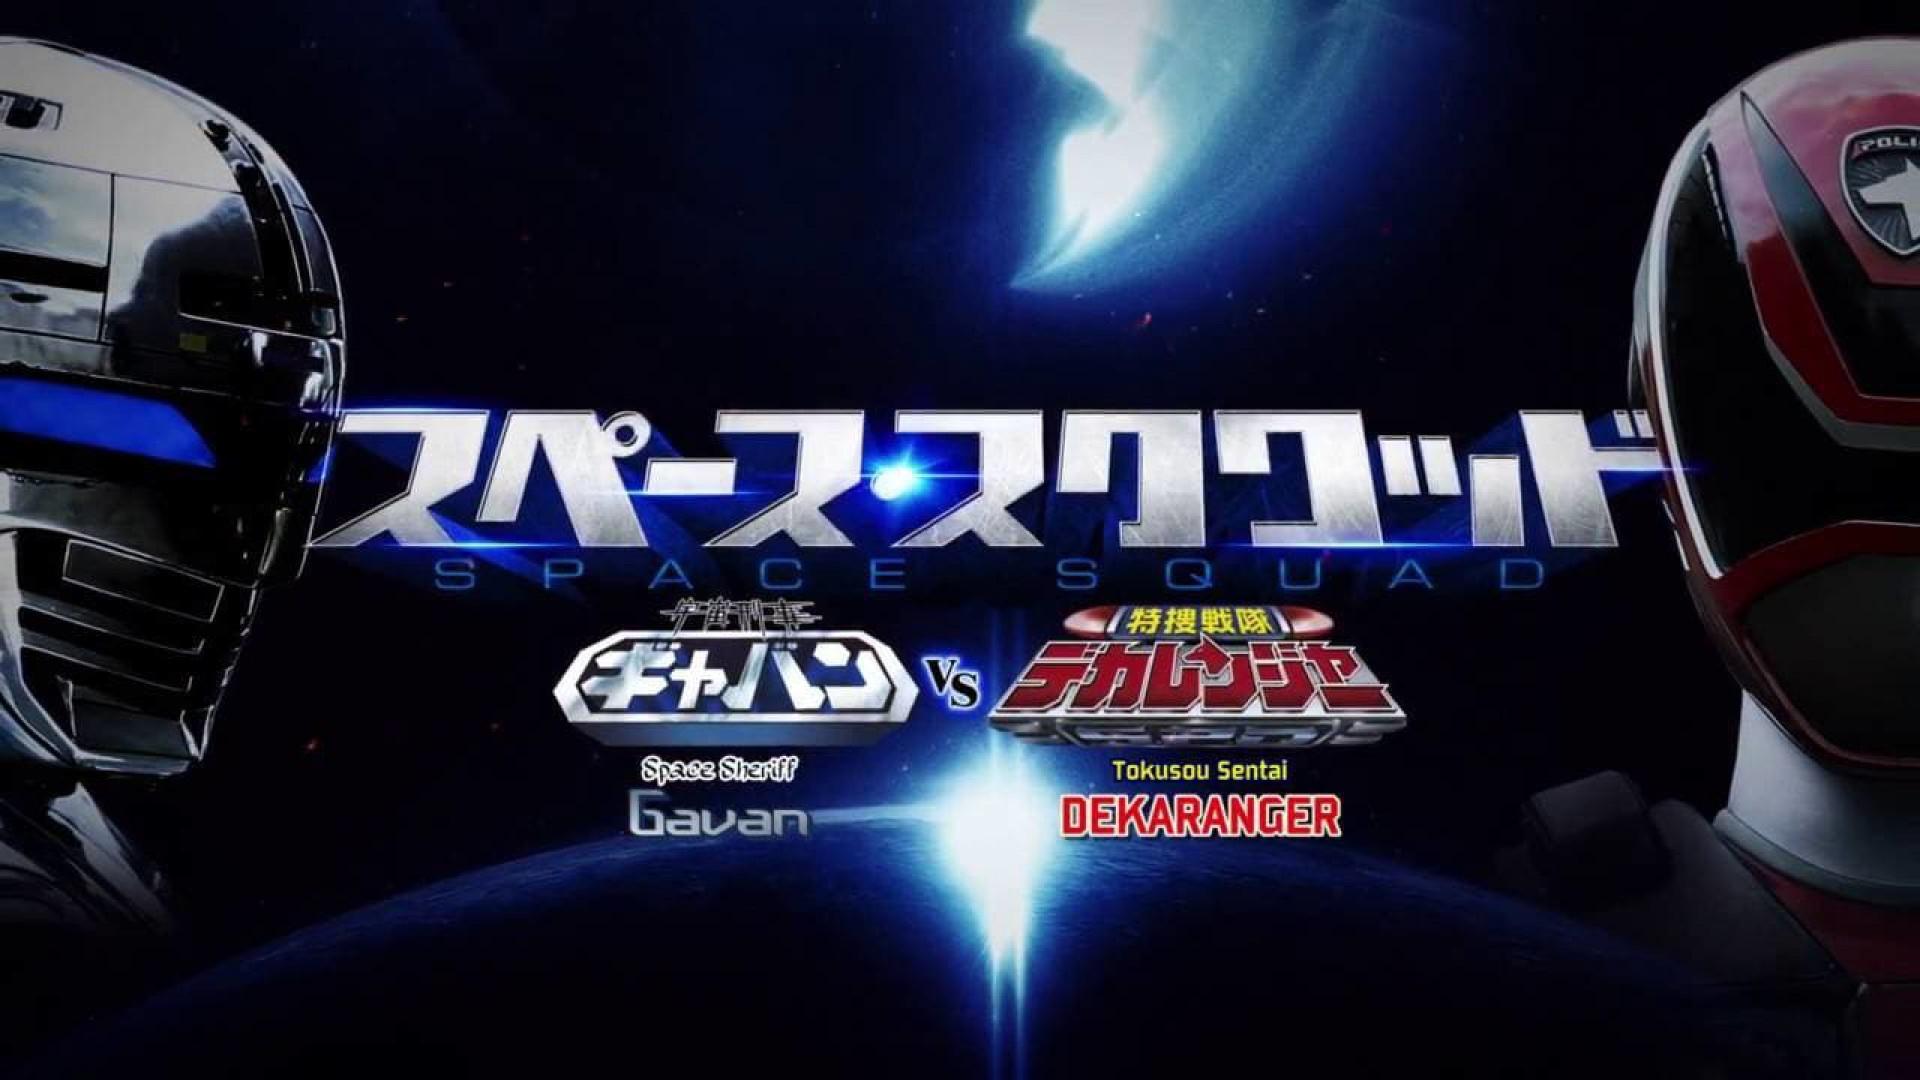 Space Squad: Space Sheriff Gavan vs. Tokusou Sentai Dekaranger